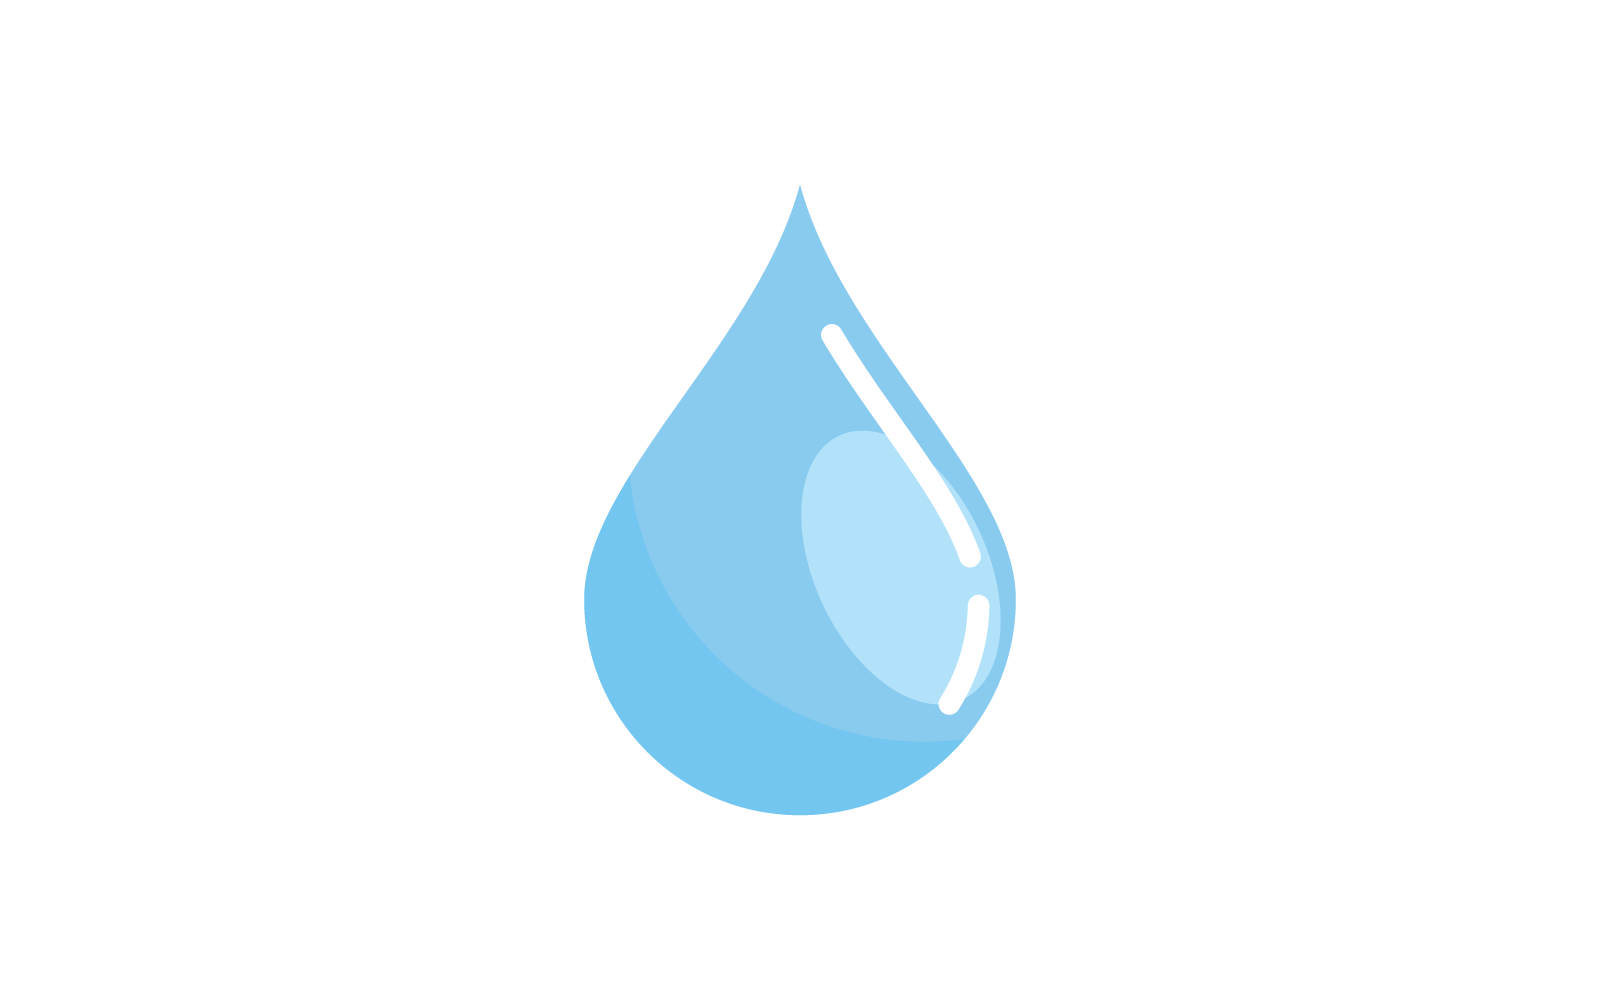 Water drop design illustration logo vector template